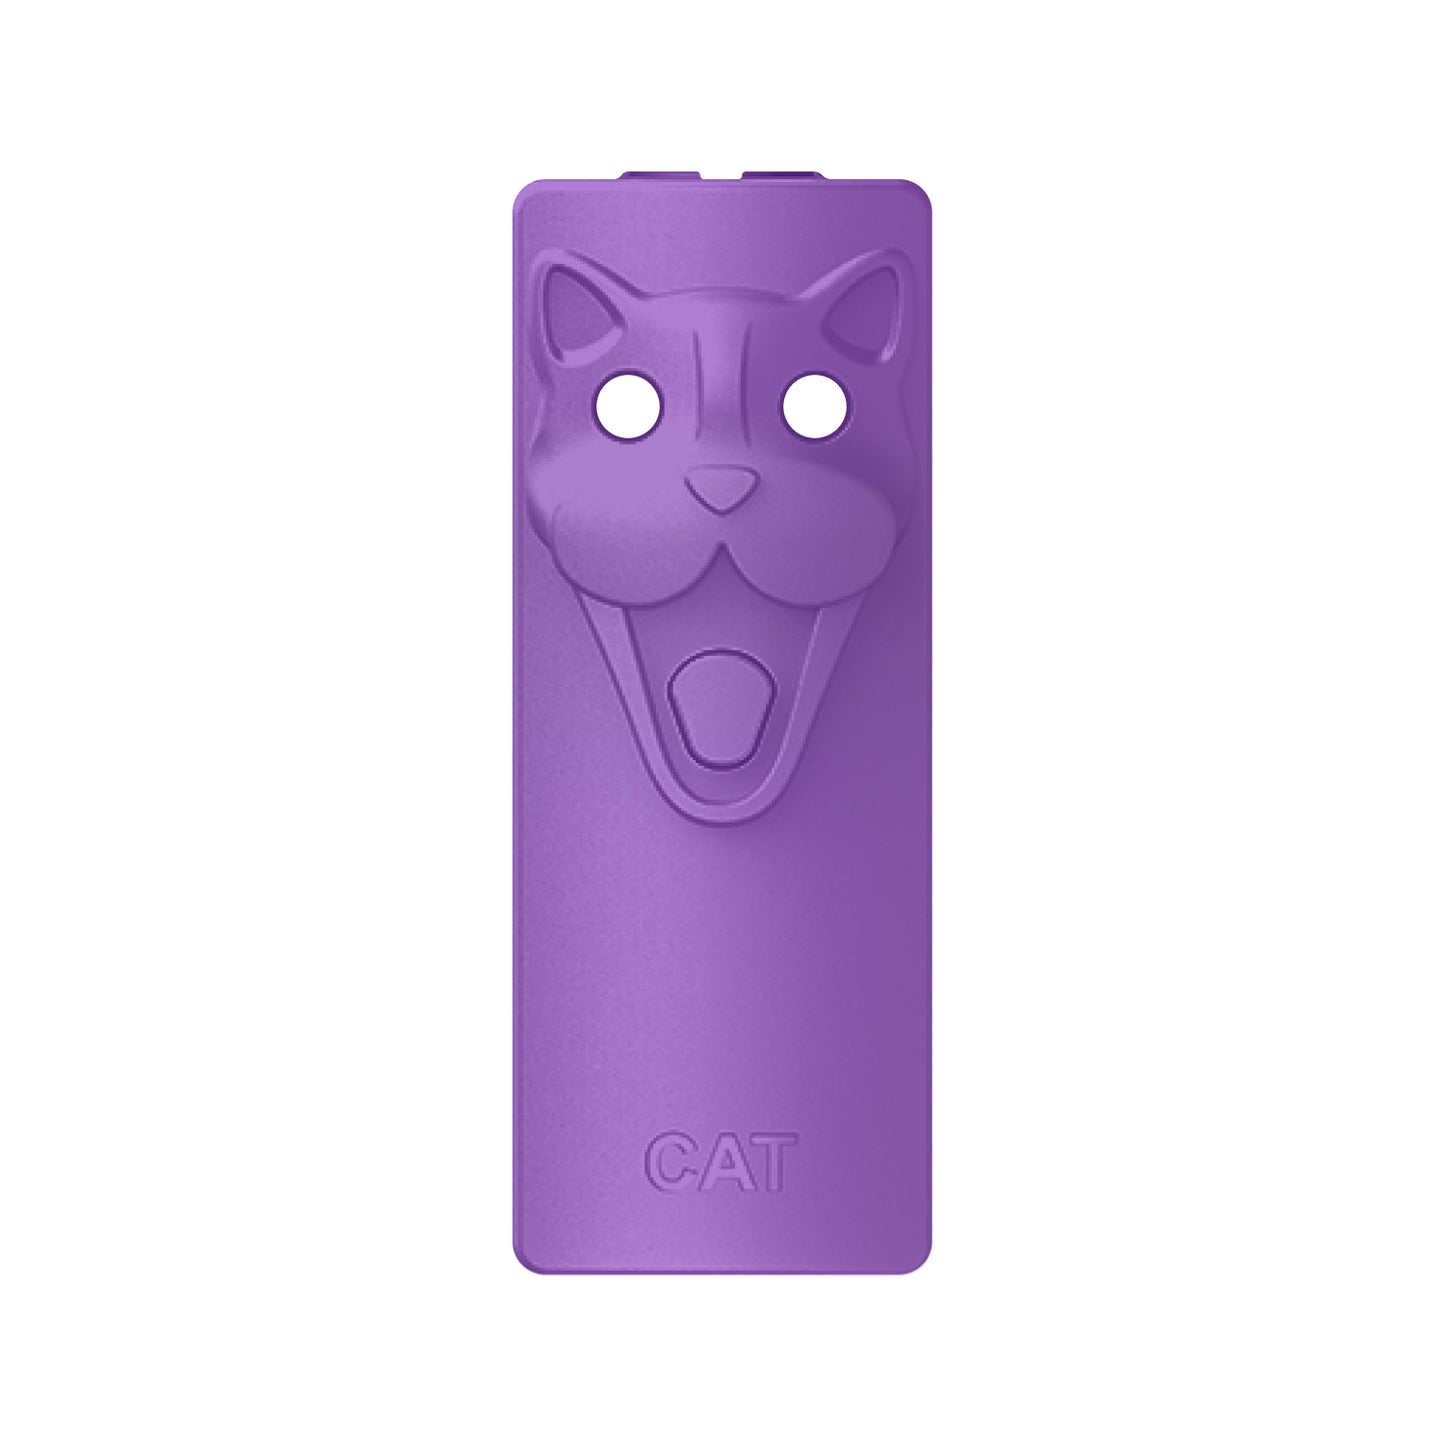 Yocan Kodo Animal Box Mod - cat - purple